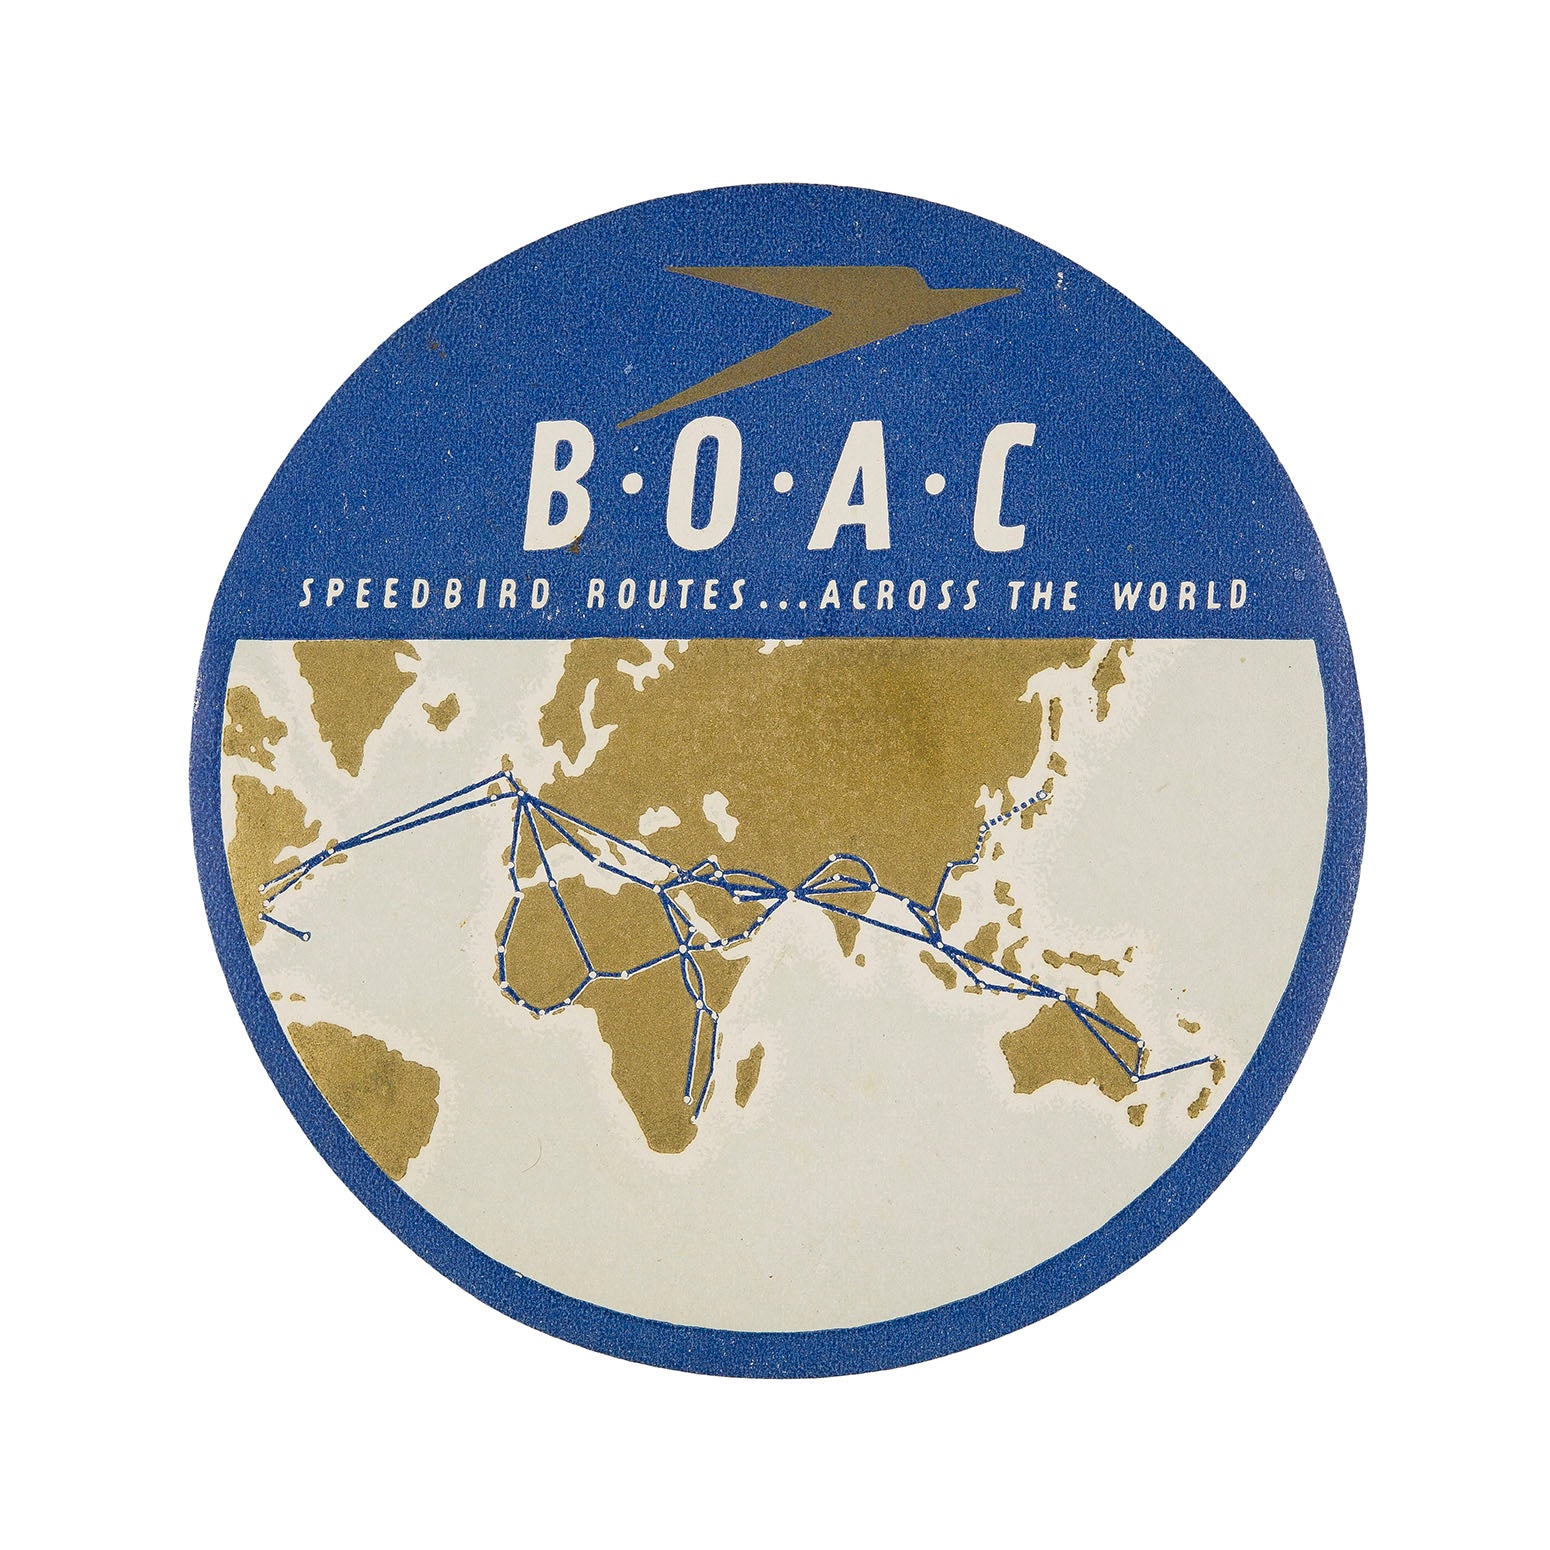 BOAC Speedbird Routes… Across the World (Luggage Label - smaller size)